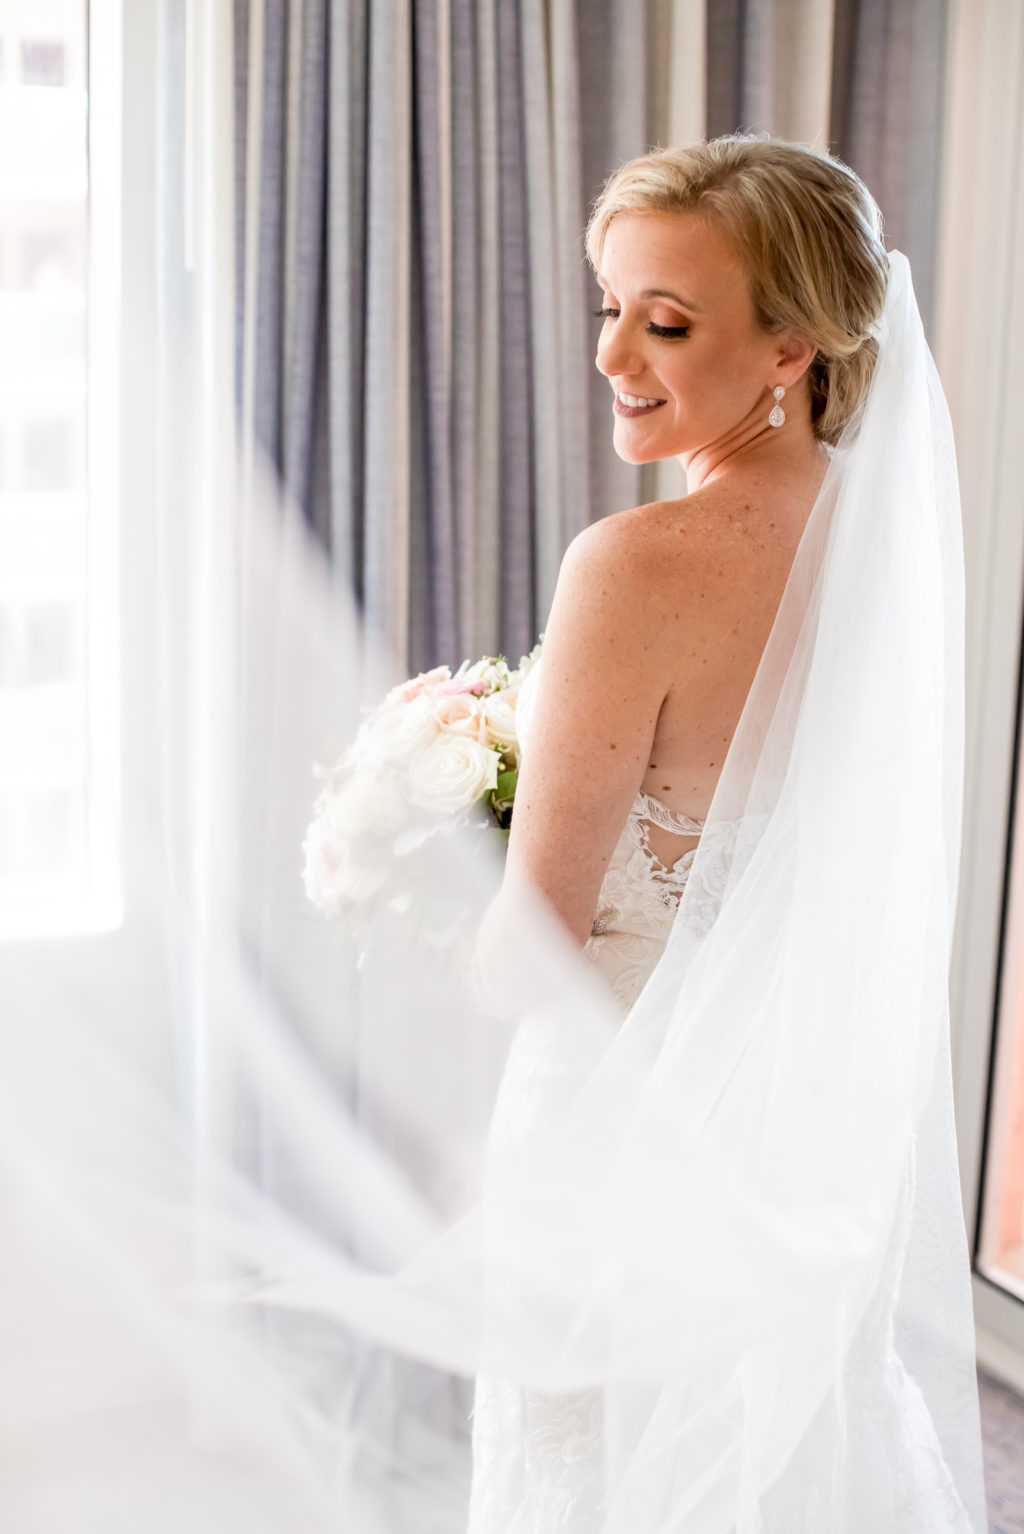 Indoor Bridal Portrait Veil Shot | White and Blush Pink Rose Bridal Wedding Bouquet | Classic Chignon Bridal Hair Style